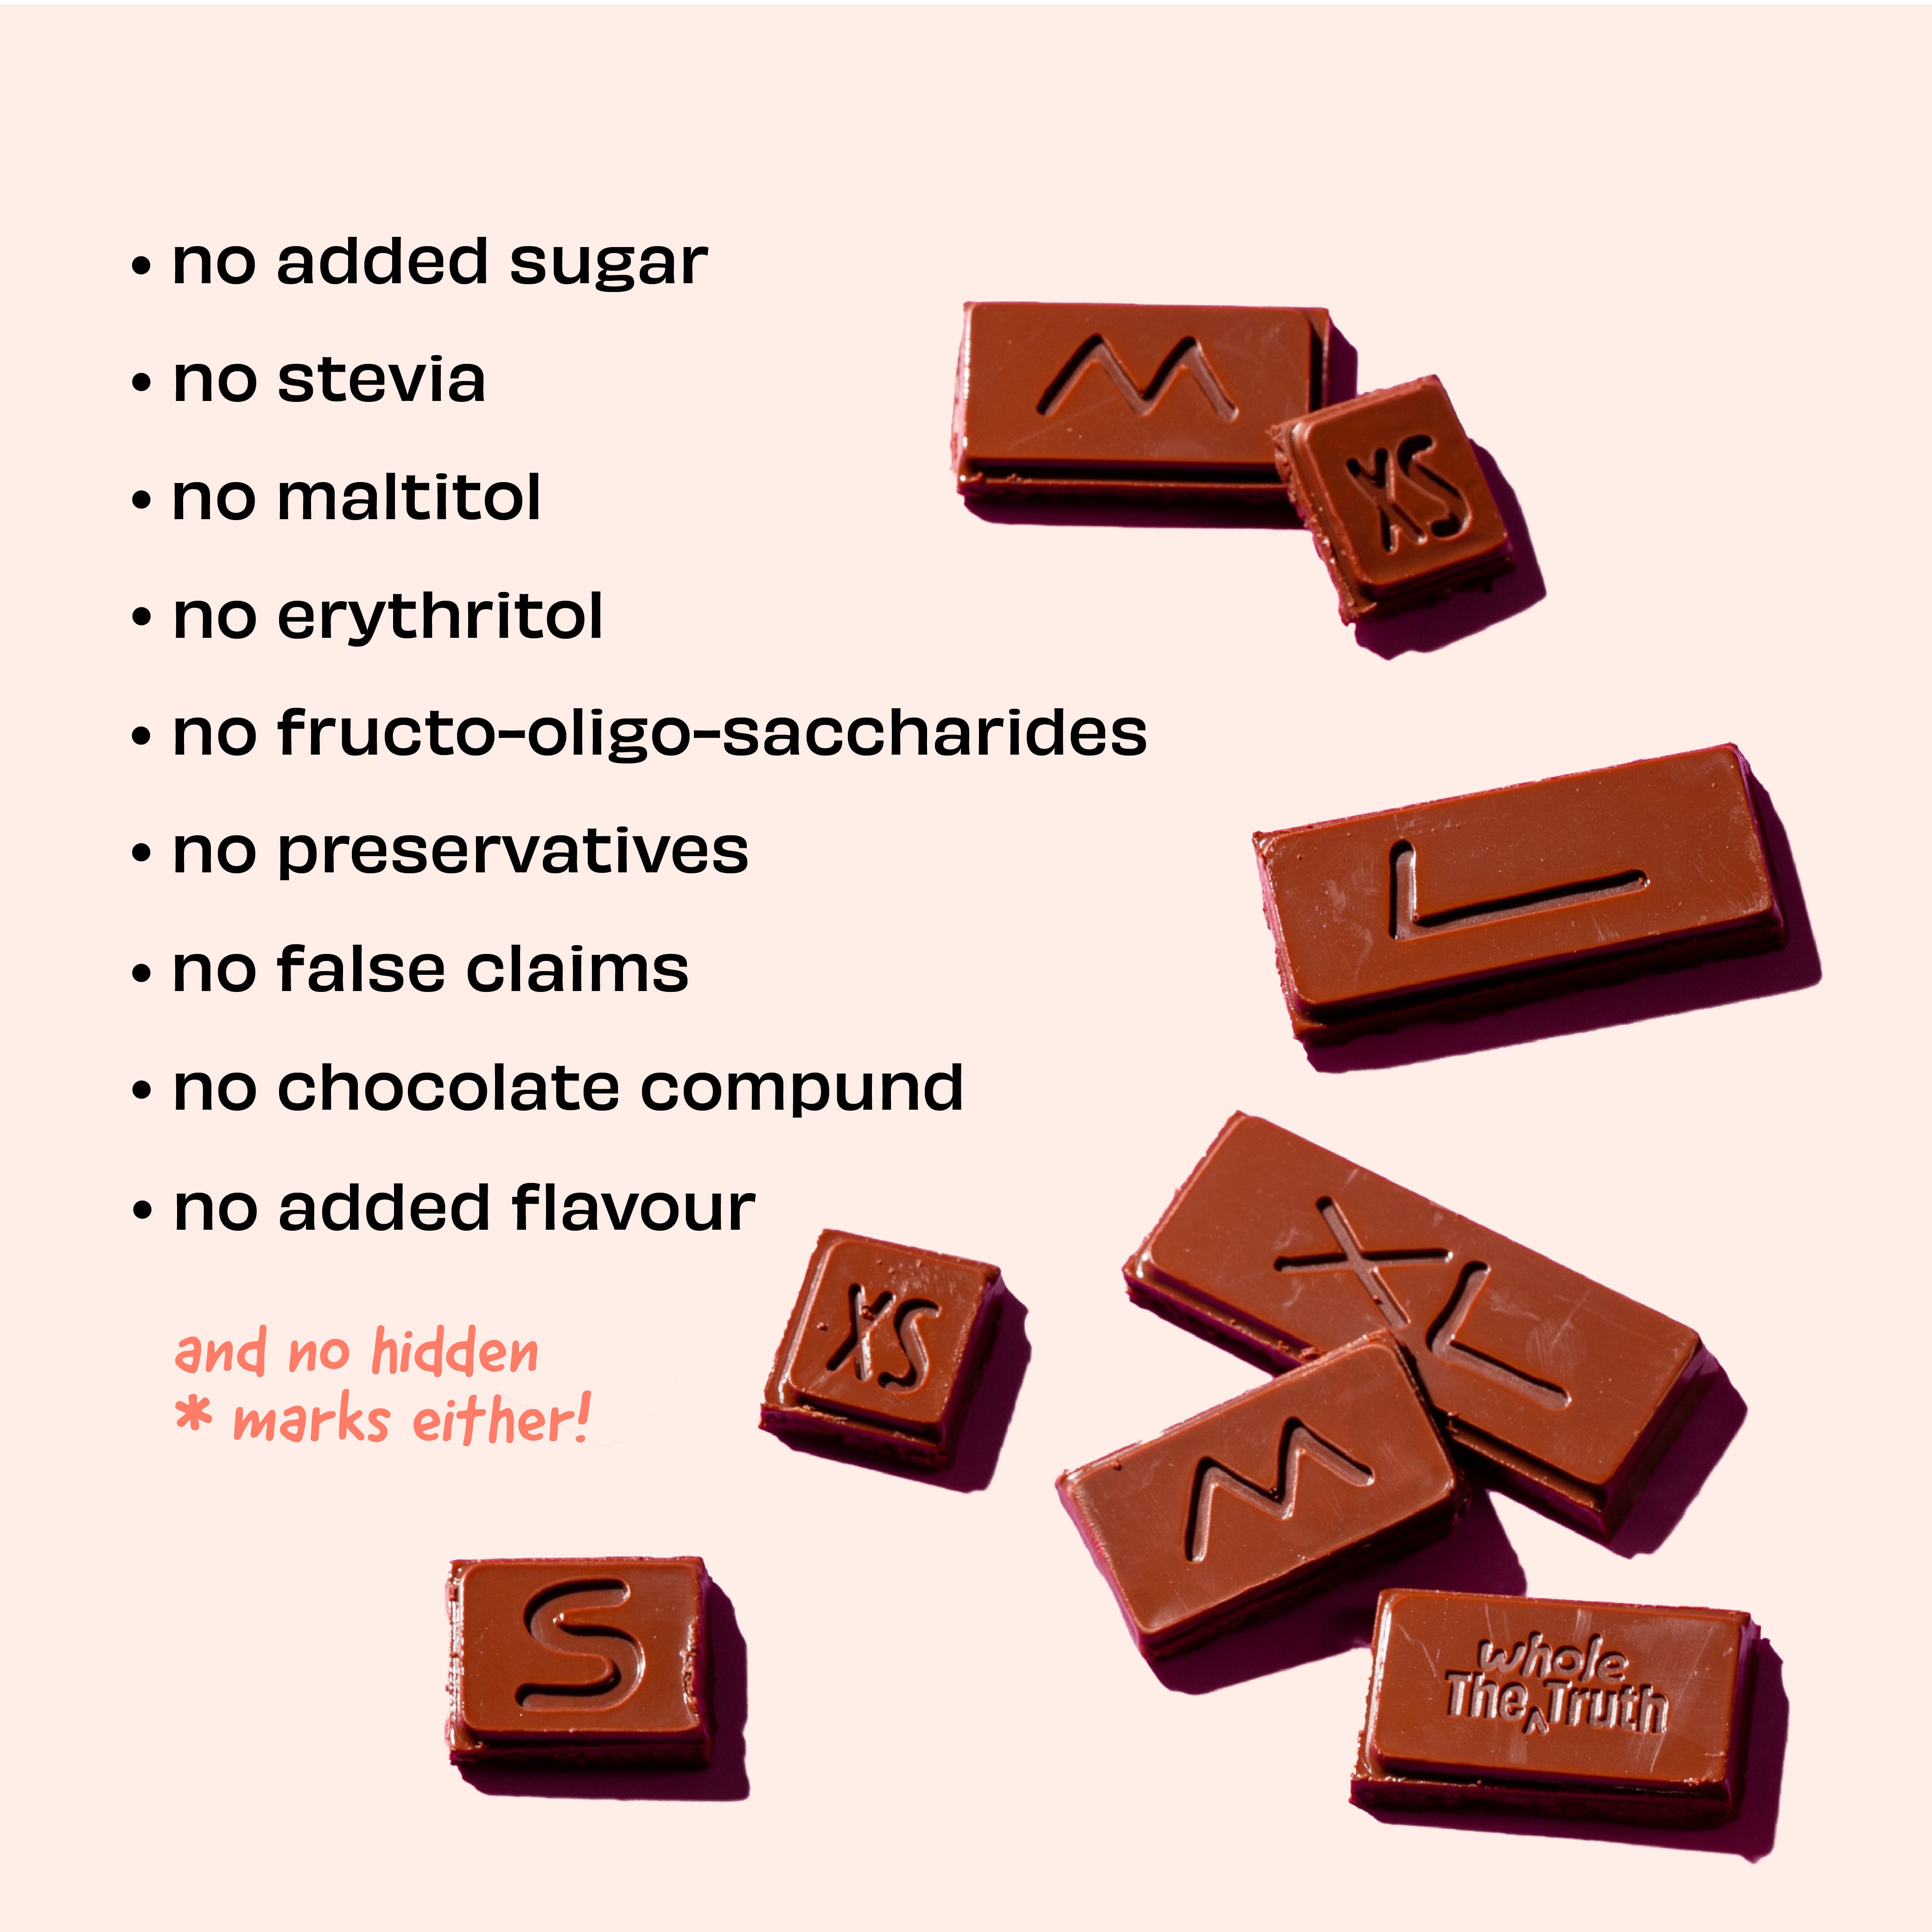 The Whole Truth - Dark Chocolate Combo | 55% Dark Chocolate | Pack of 3 | 160 g | No Added Sugar | Bean to Bar | Vegan